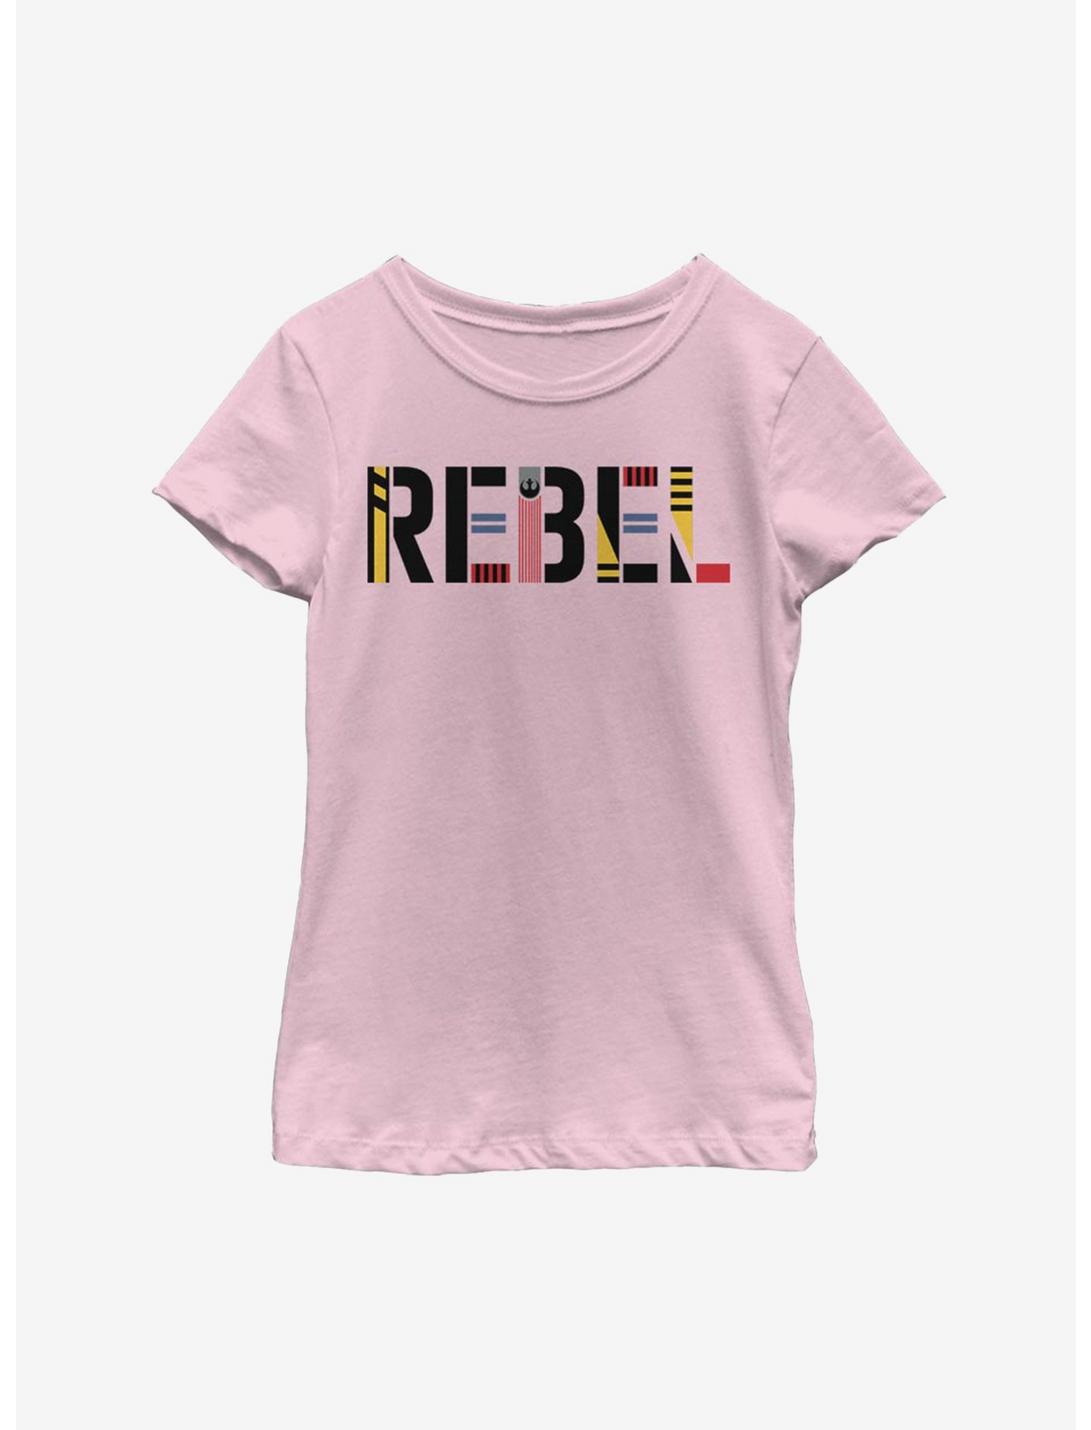 Star Wars Episode IX The Rise Of Skywalker Rebel Simple Youth Girls T-Shirt, PINK, hi-res